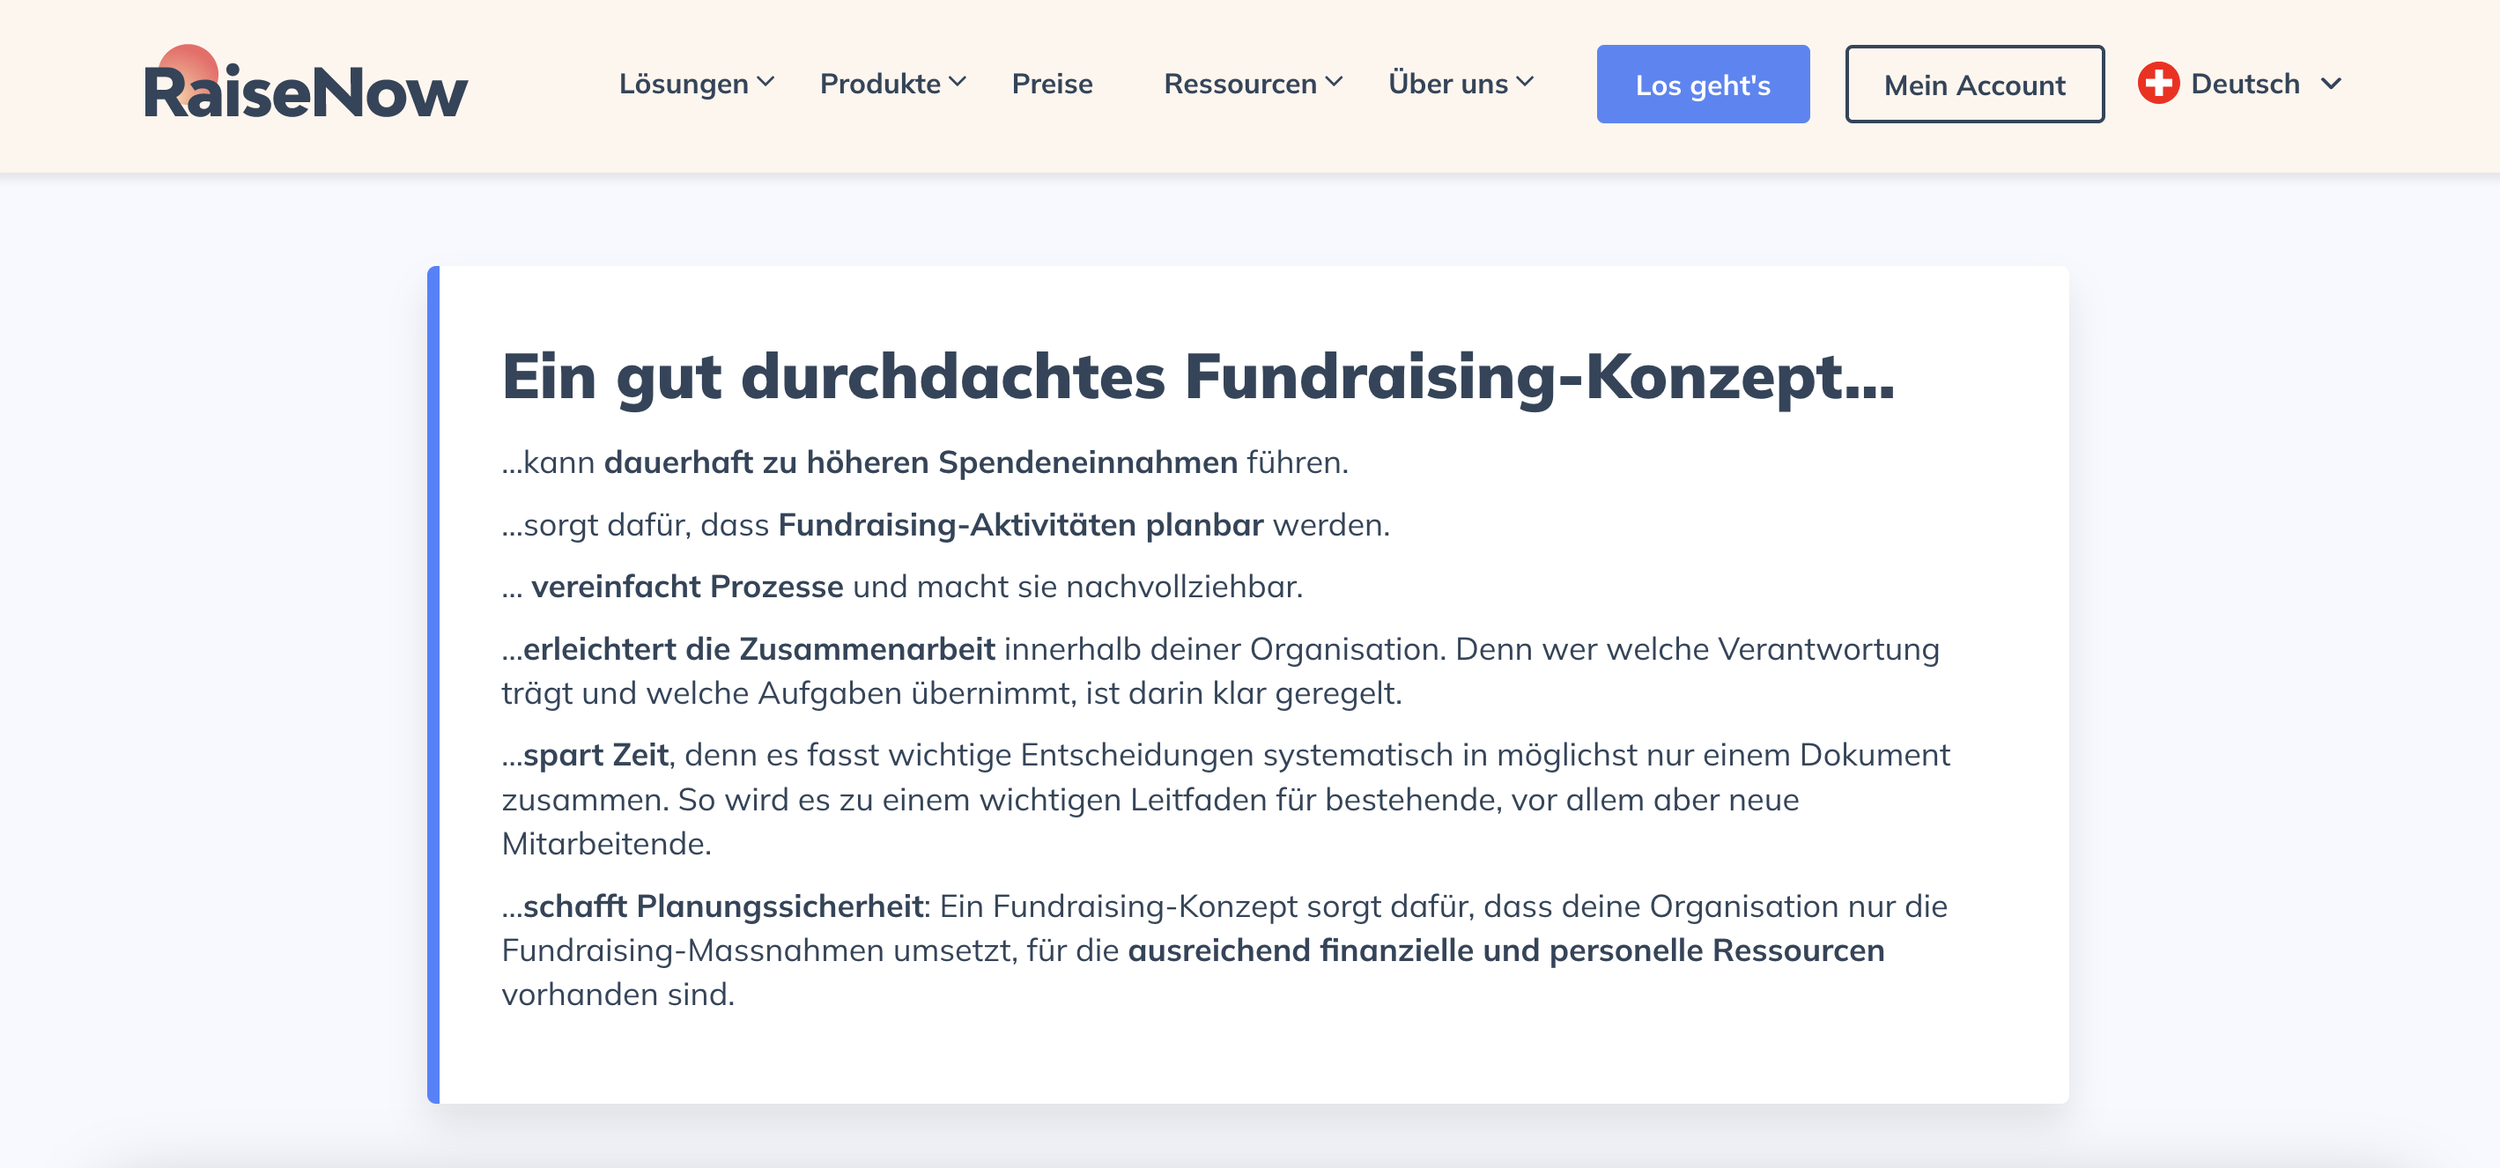 Text_RaiseNow_Fundraising_Konzept_Wissen.png